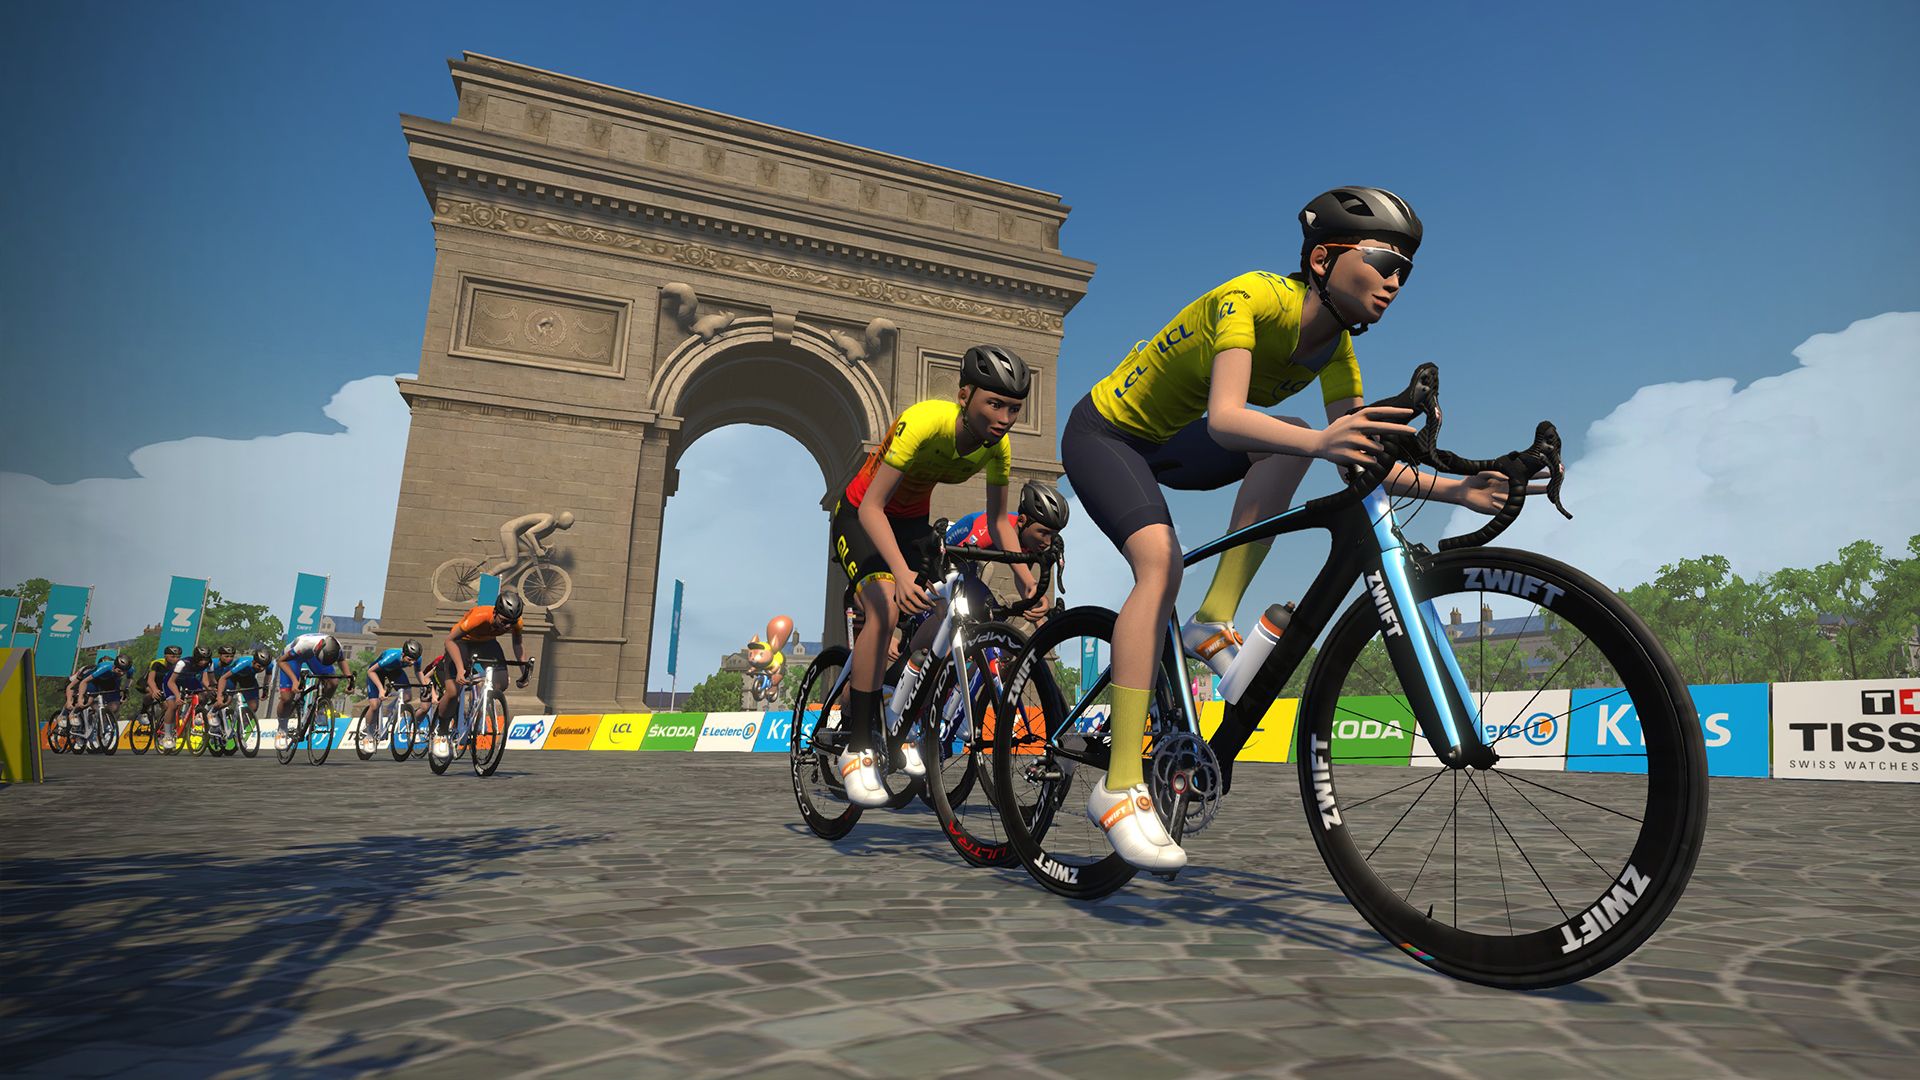 Tour de France, Zwift Ready an Unprecedented Virtual Cycling Race